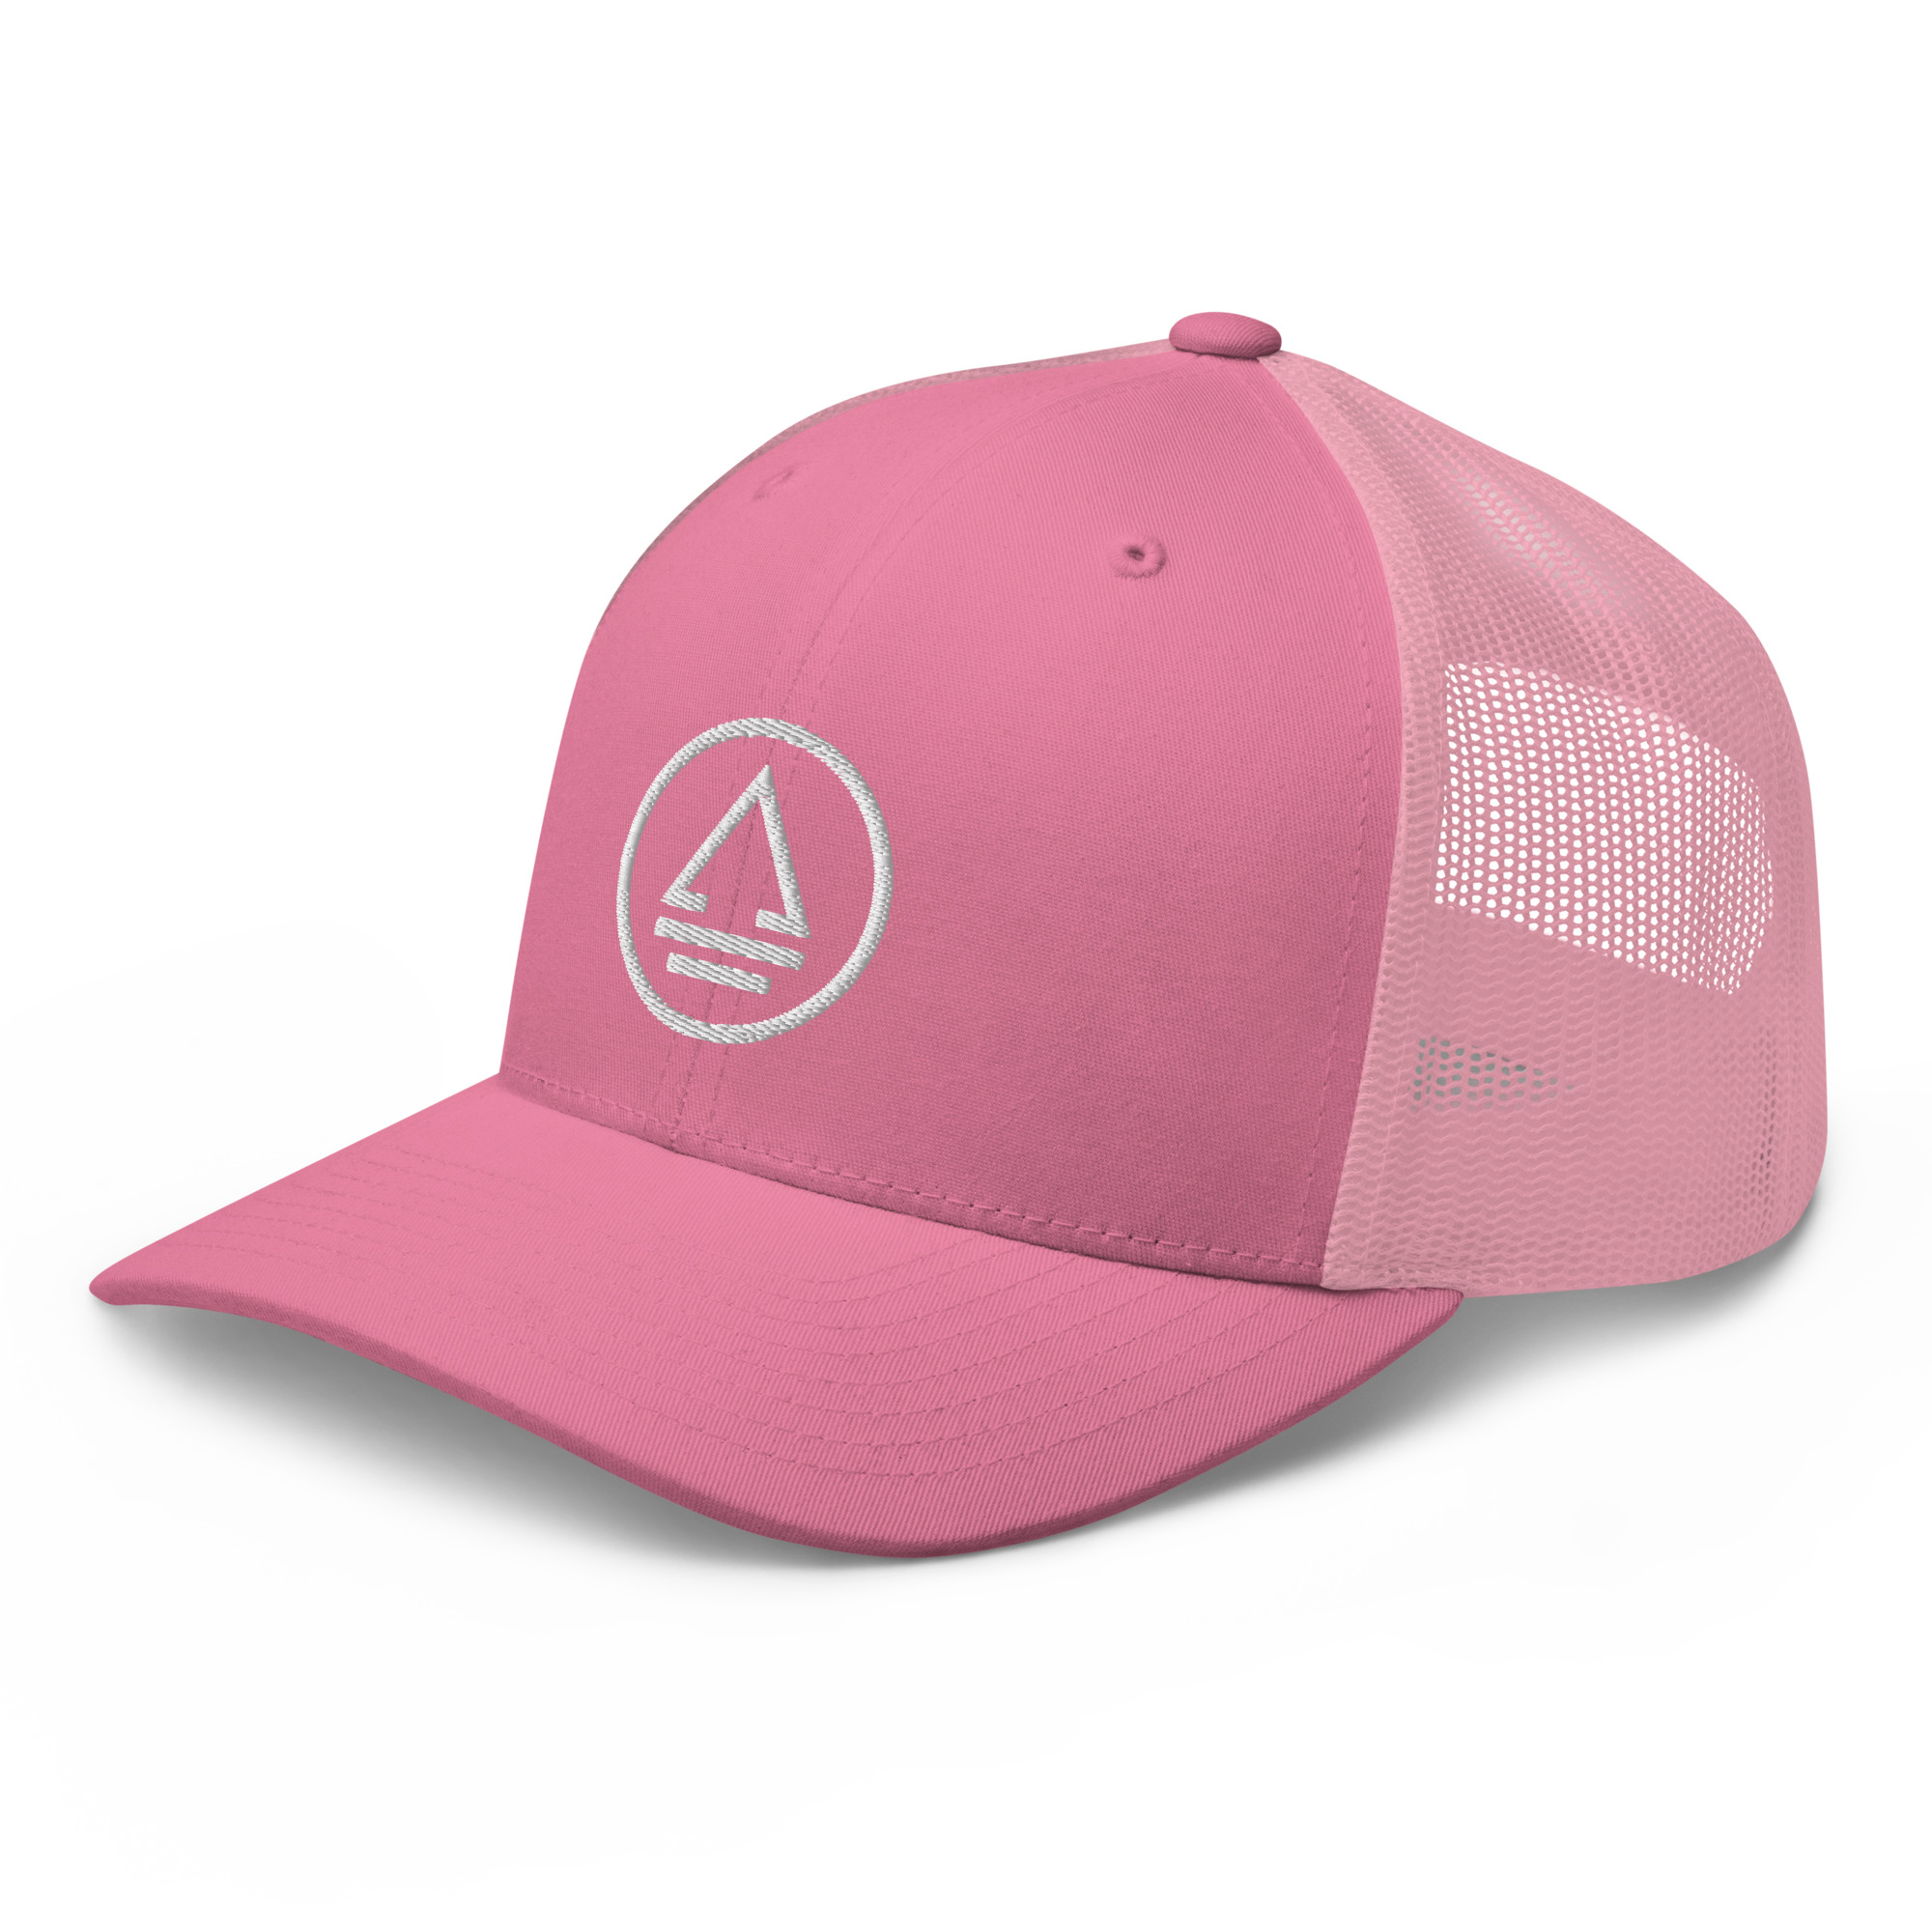 retro-trucker-hat-pink-left-front-64ca3d310508e.jpg